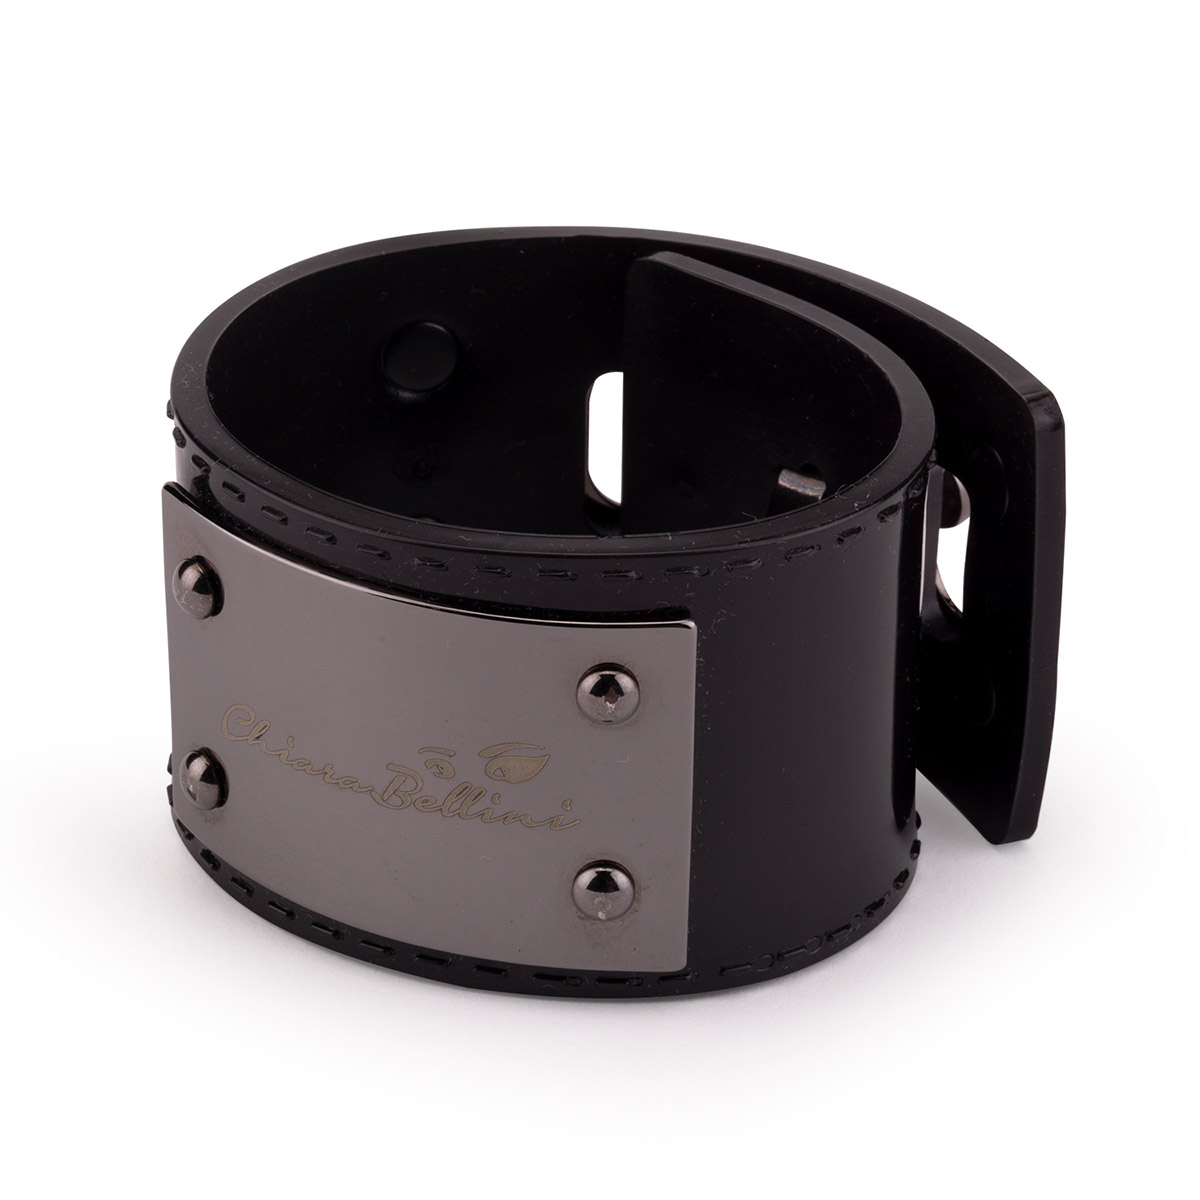 Bracelet in Black Pvc with metal plate